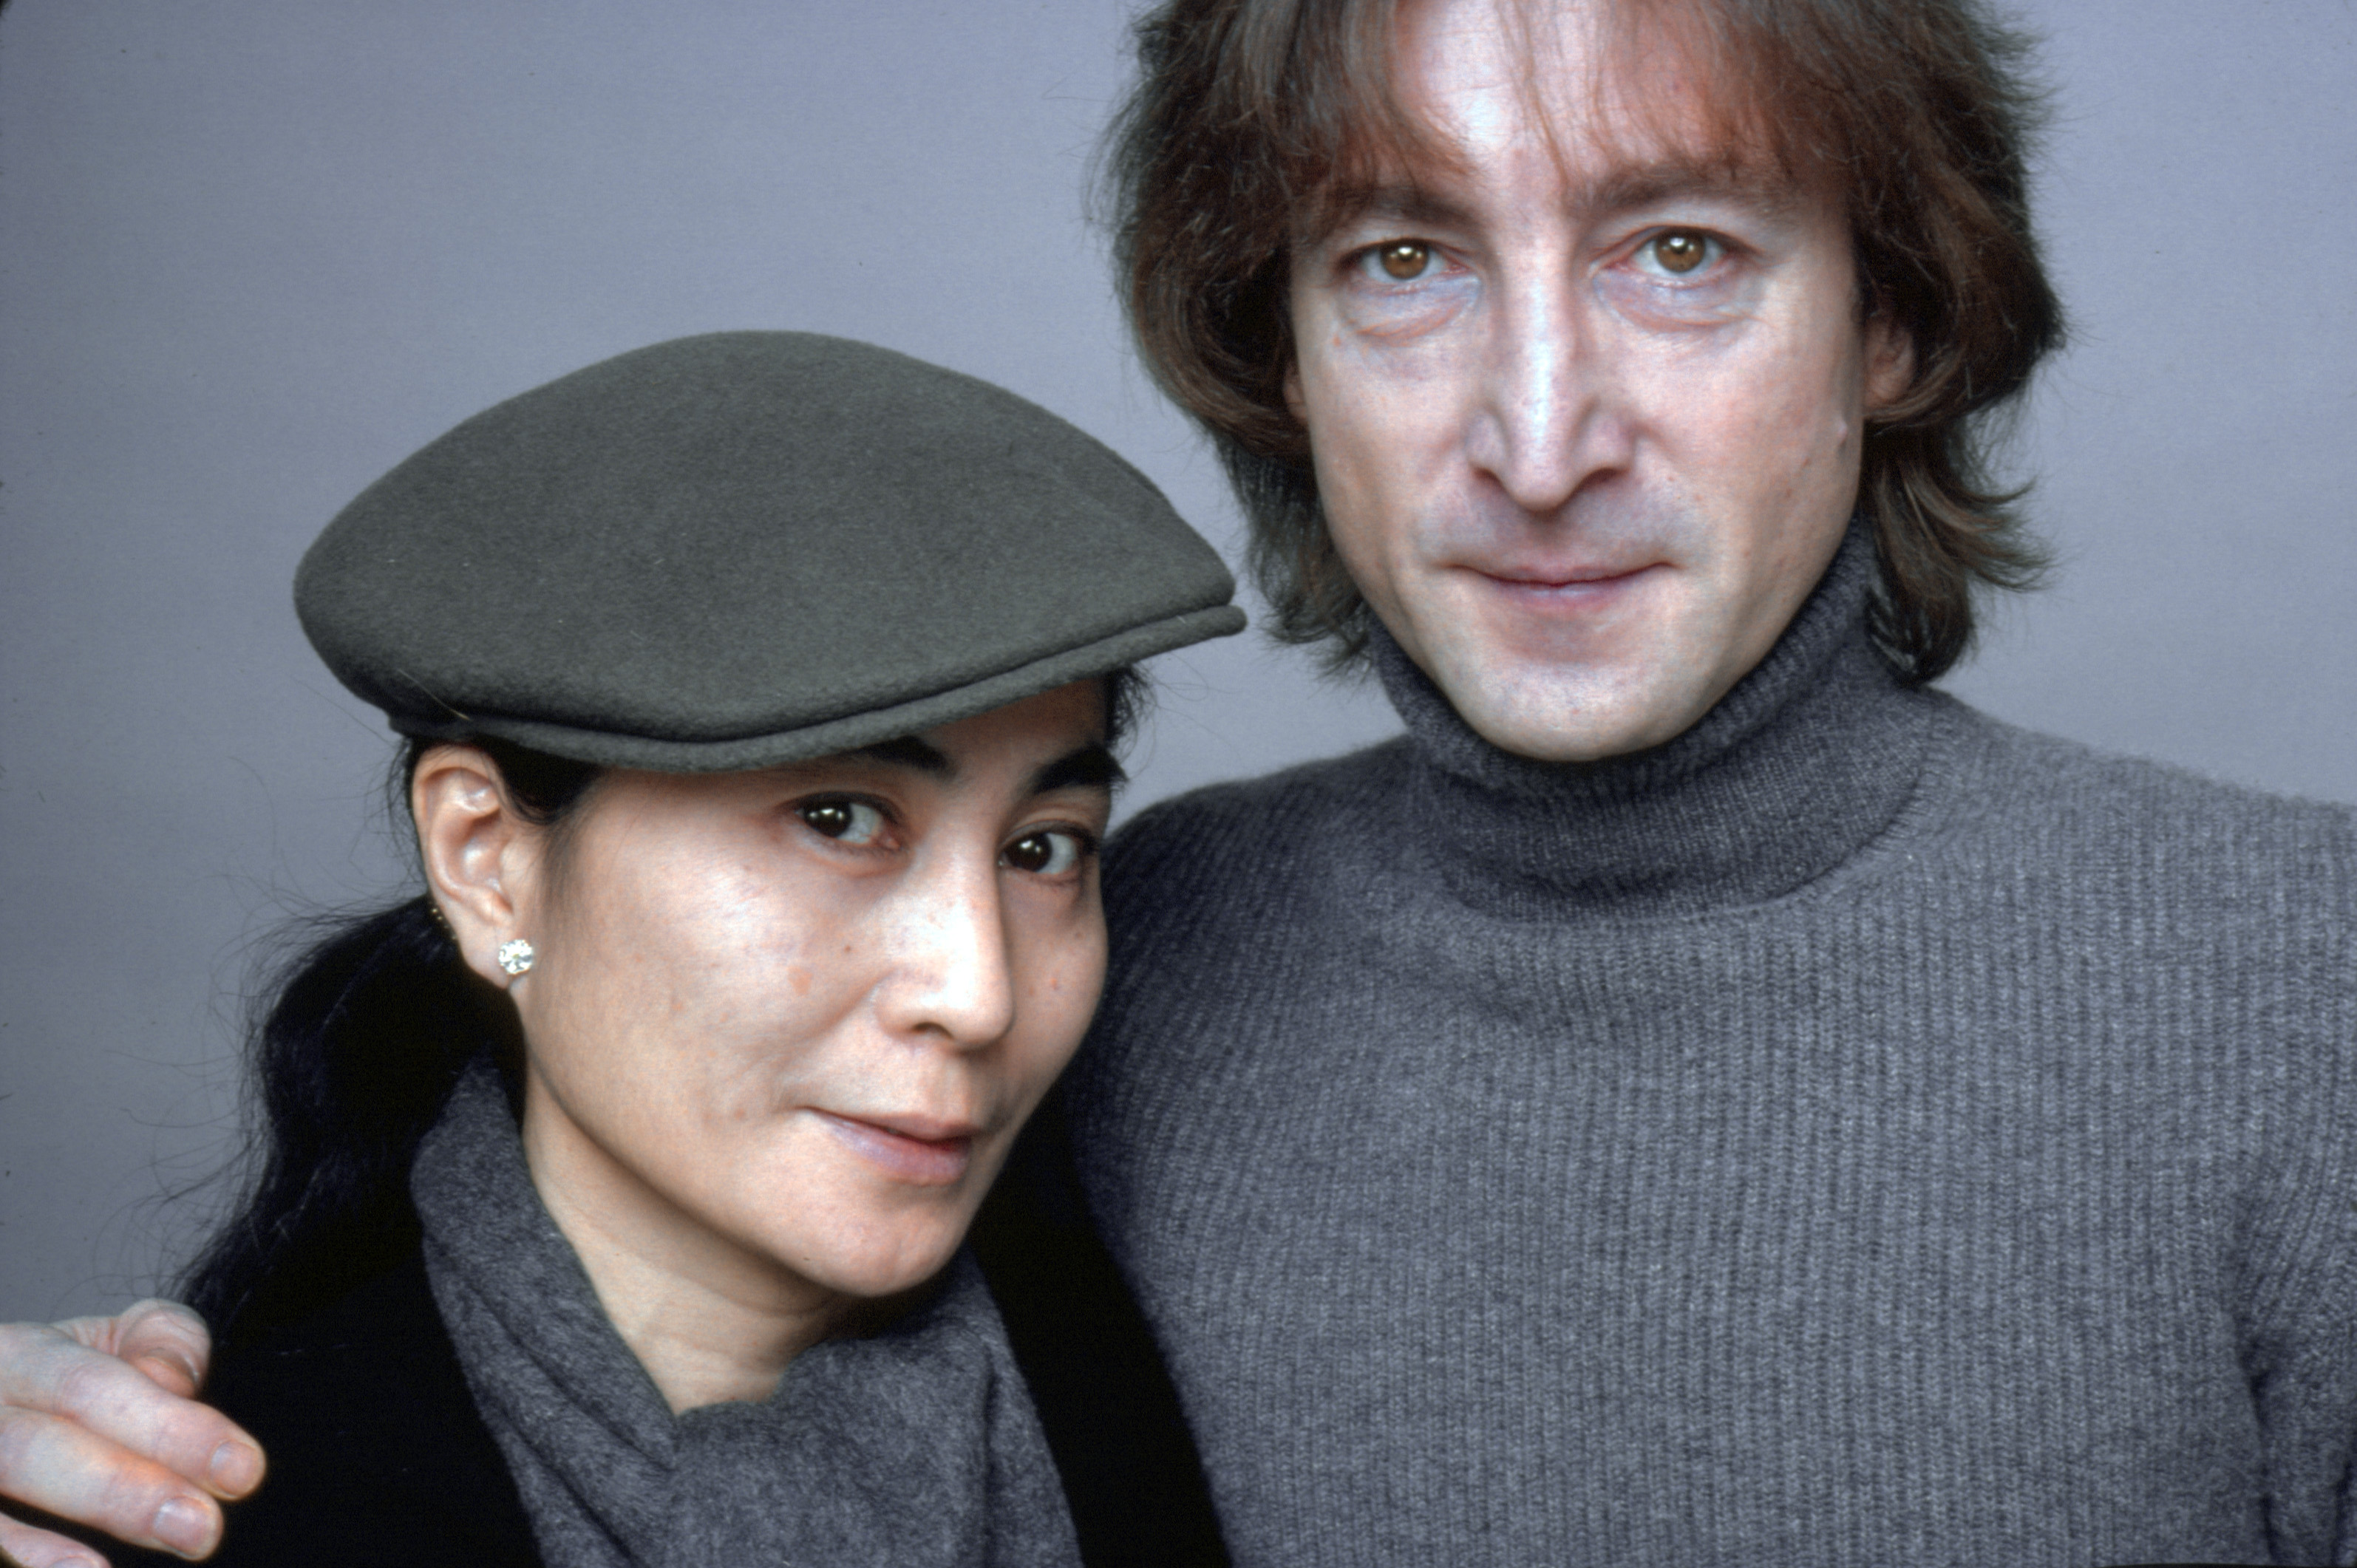 John Lennon and Yoko Ono wearing grey